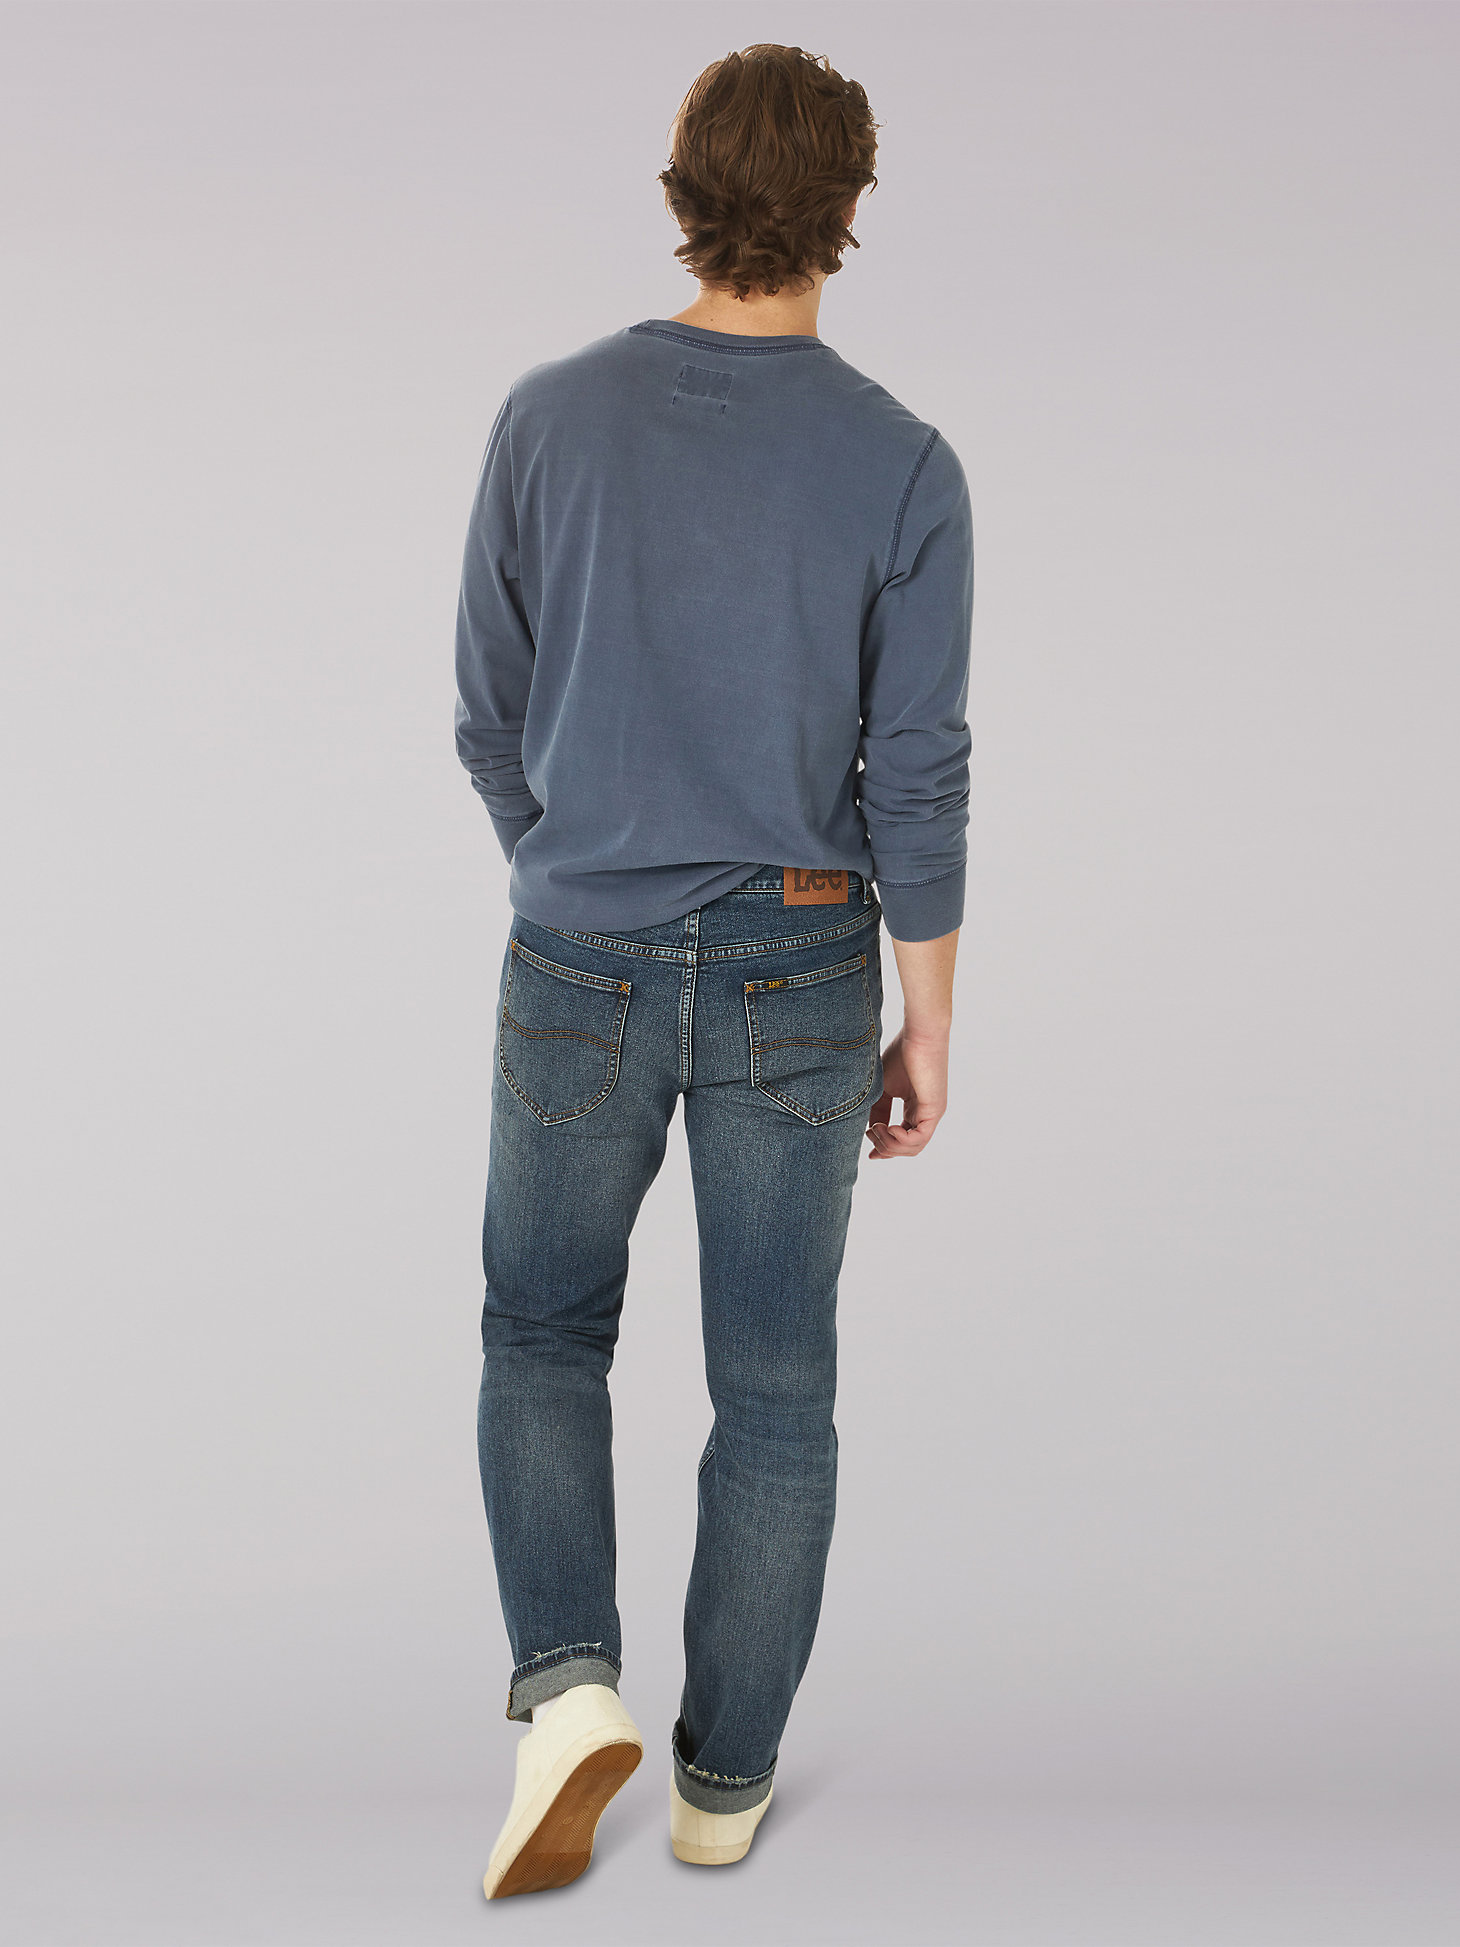 Men's Heritage Slim Straight Jean in Lucas alternative view 1